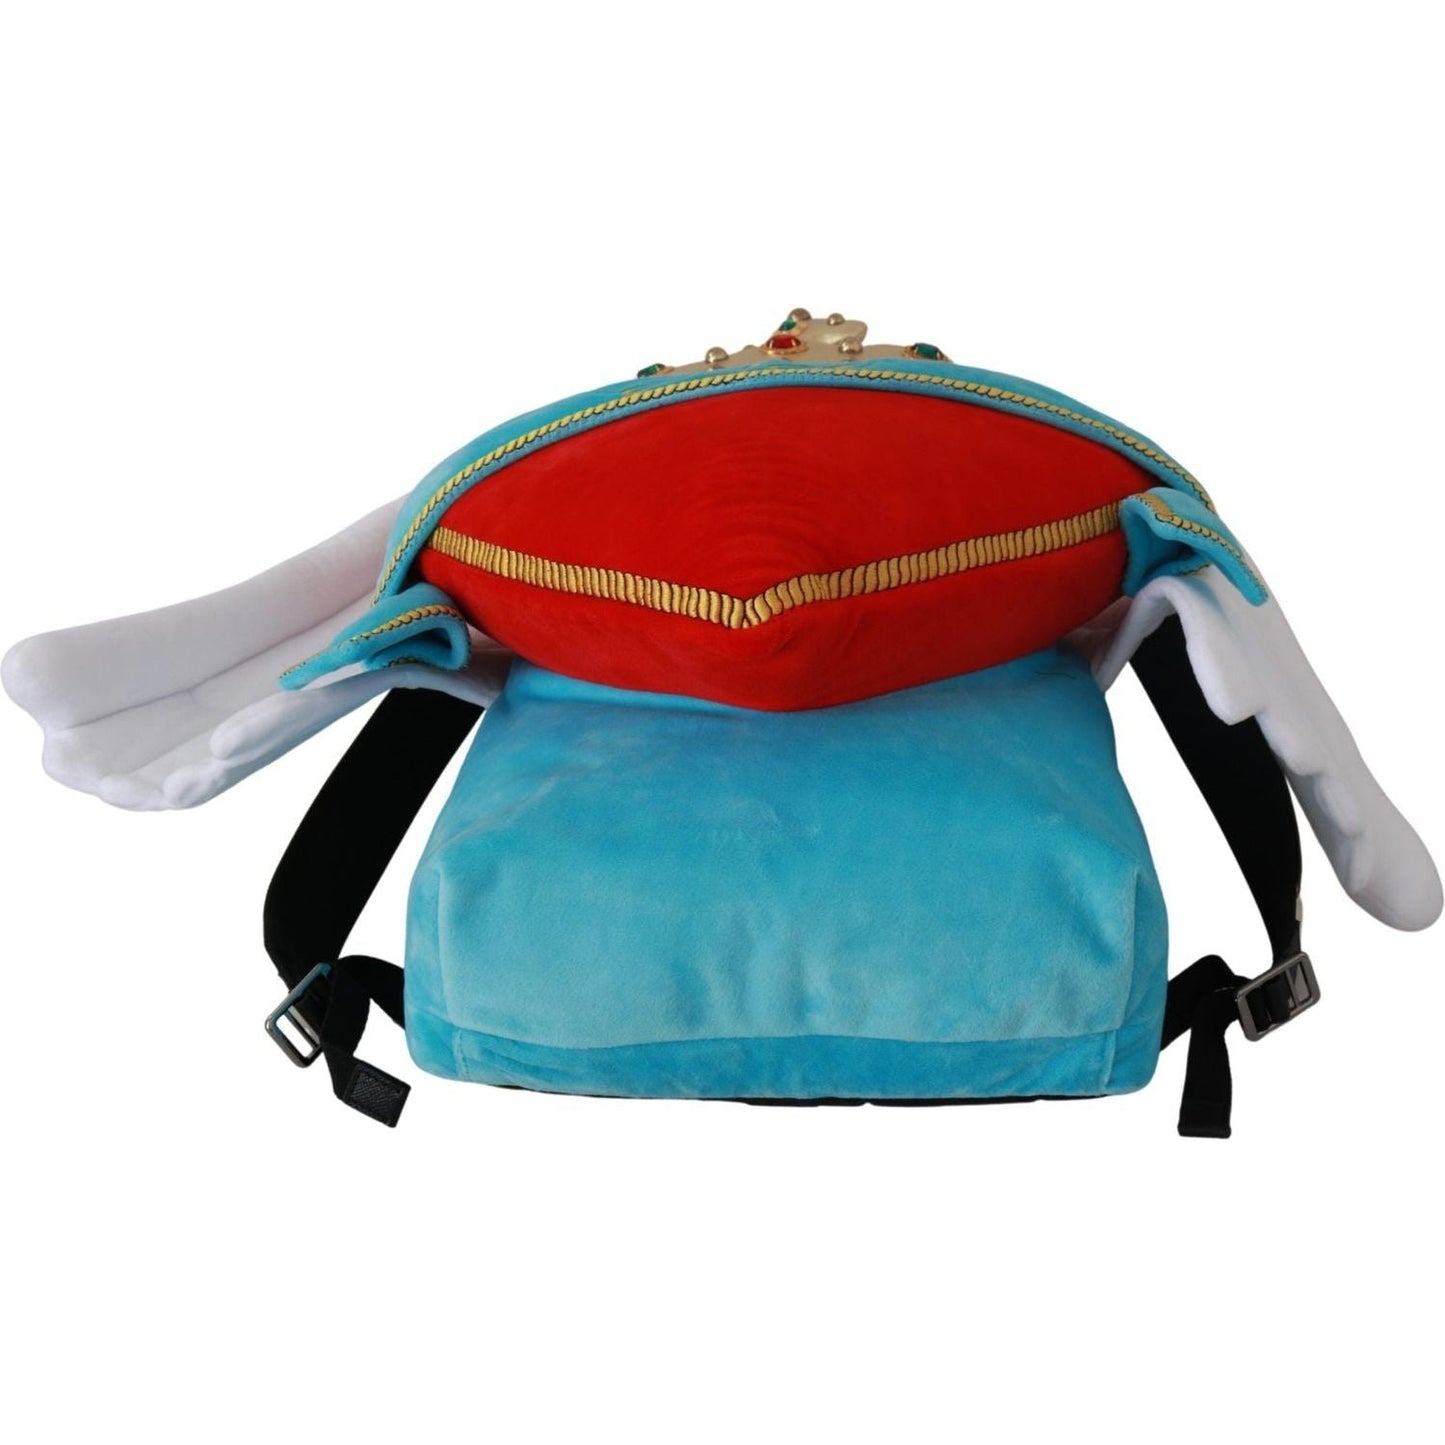 Dolce & Gabbana Jeweled Heart Wings Backpack red-blue-heart-wings-dg-crown-school-backpack Backpack IMG_9793-1-scaled-eace34c5-c46.jpg